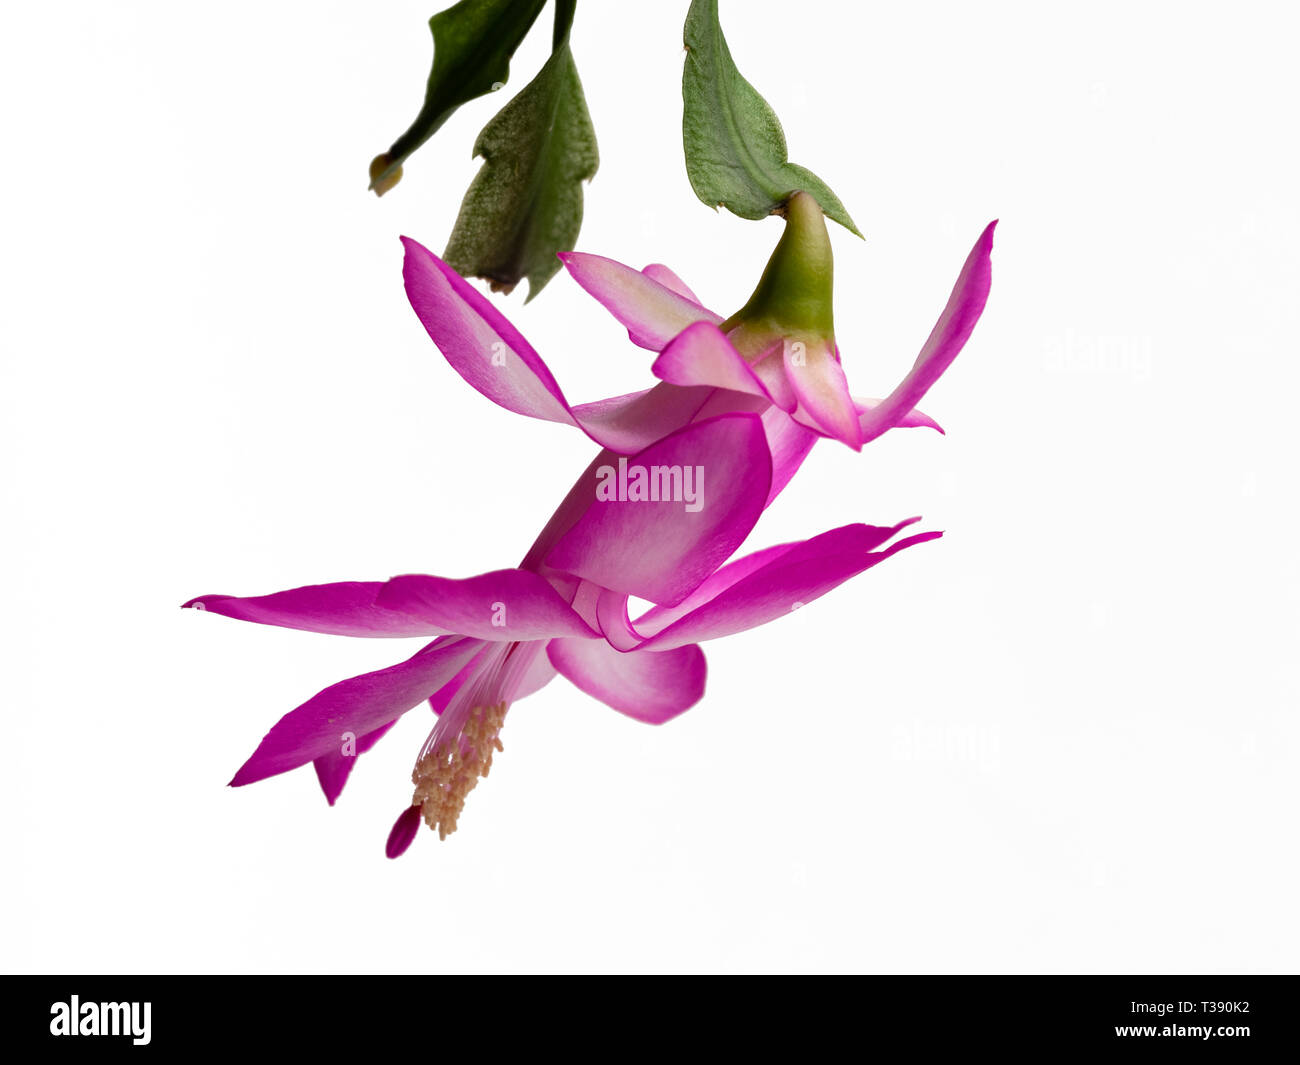 Flower of the epiphytic Christmas cactus, Schlumbergera truncata, against a white background Stock Photo